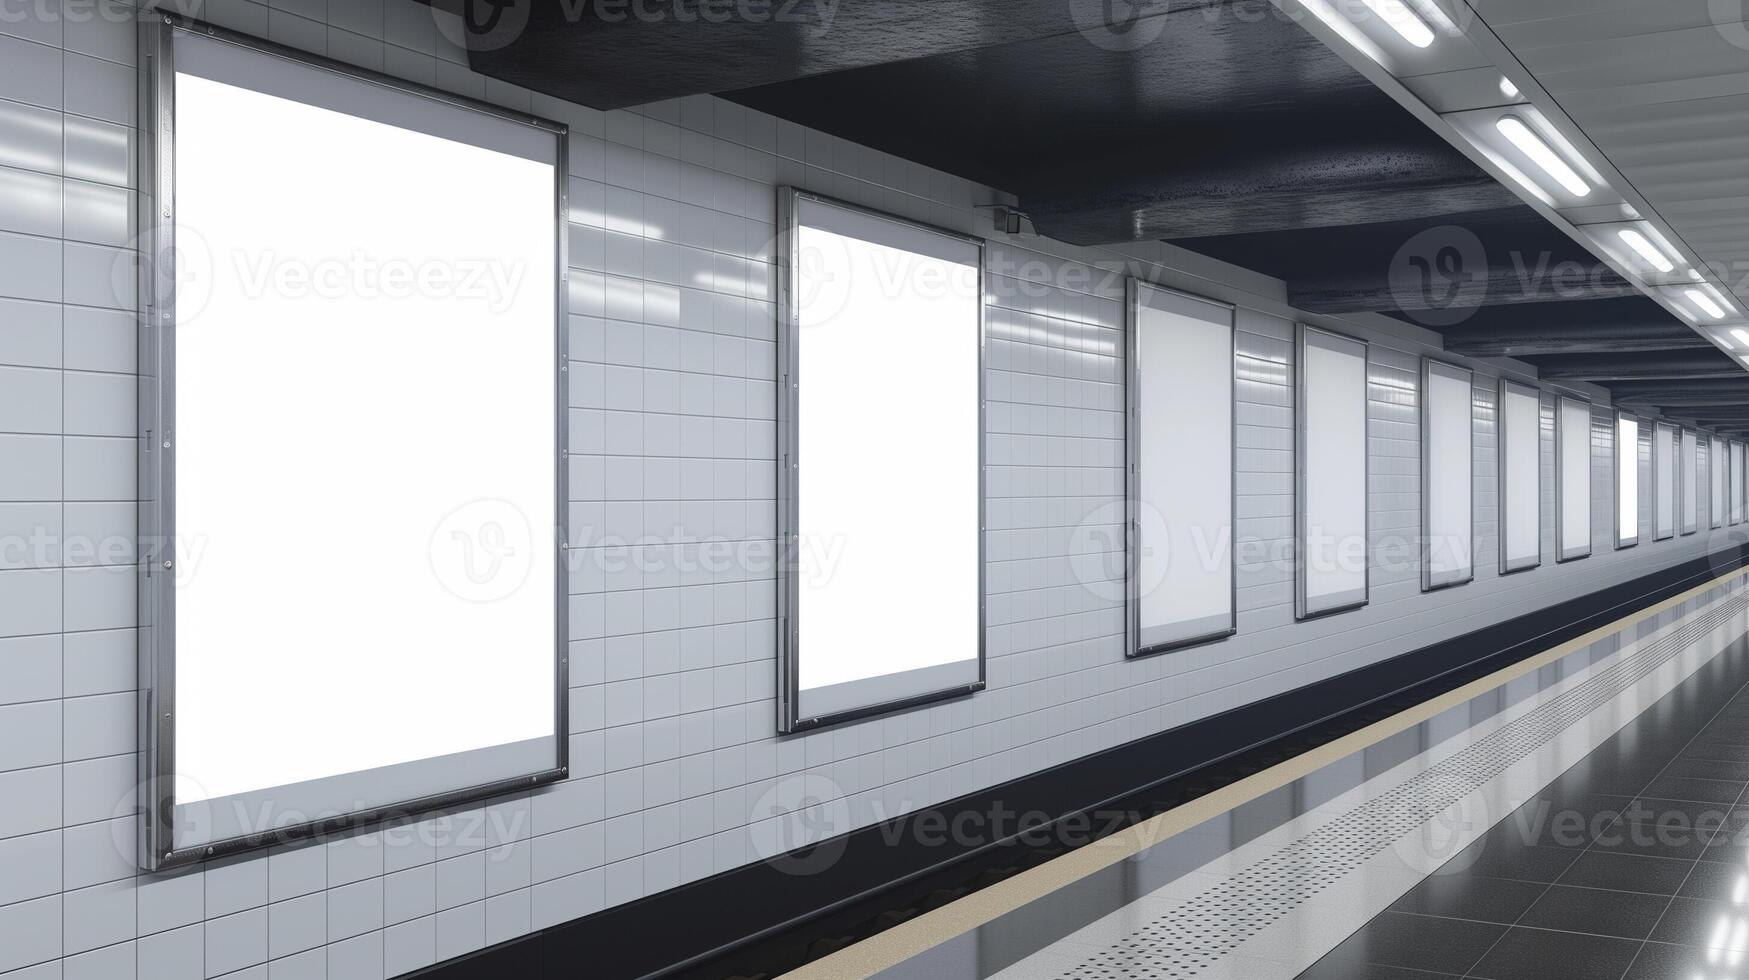 Vertikale Werbetafeln im U-Bahn Bahnhof Attrappe, Lehrmodell, Simulation foto